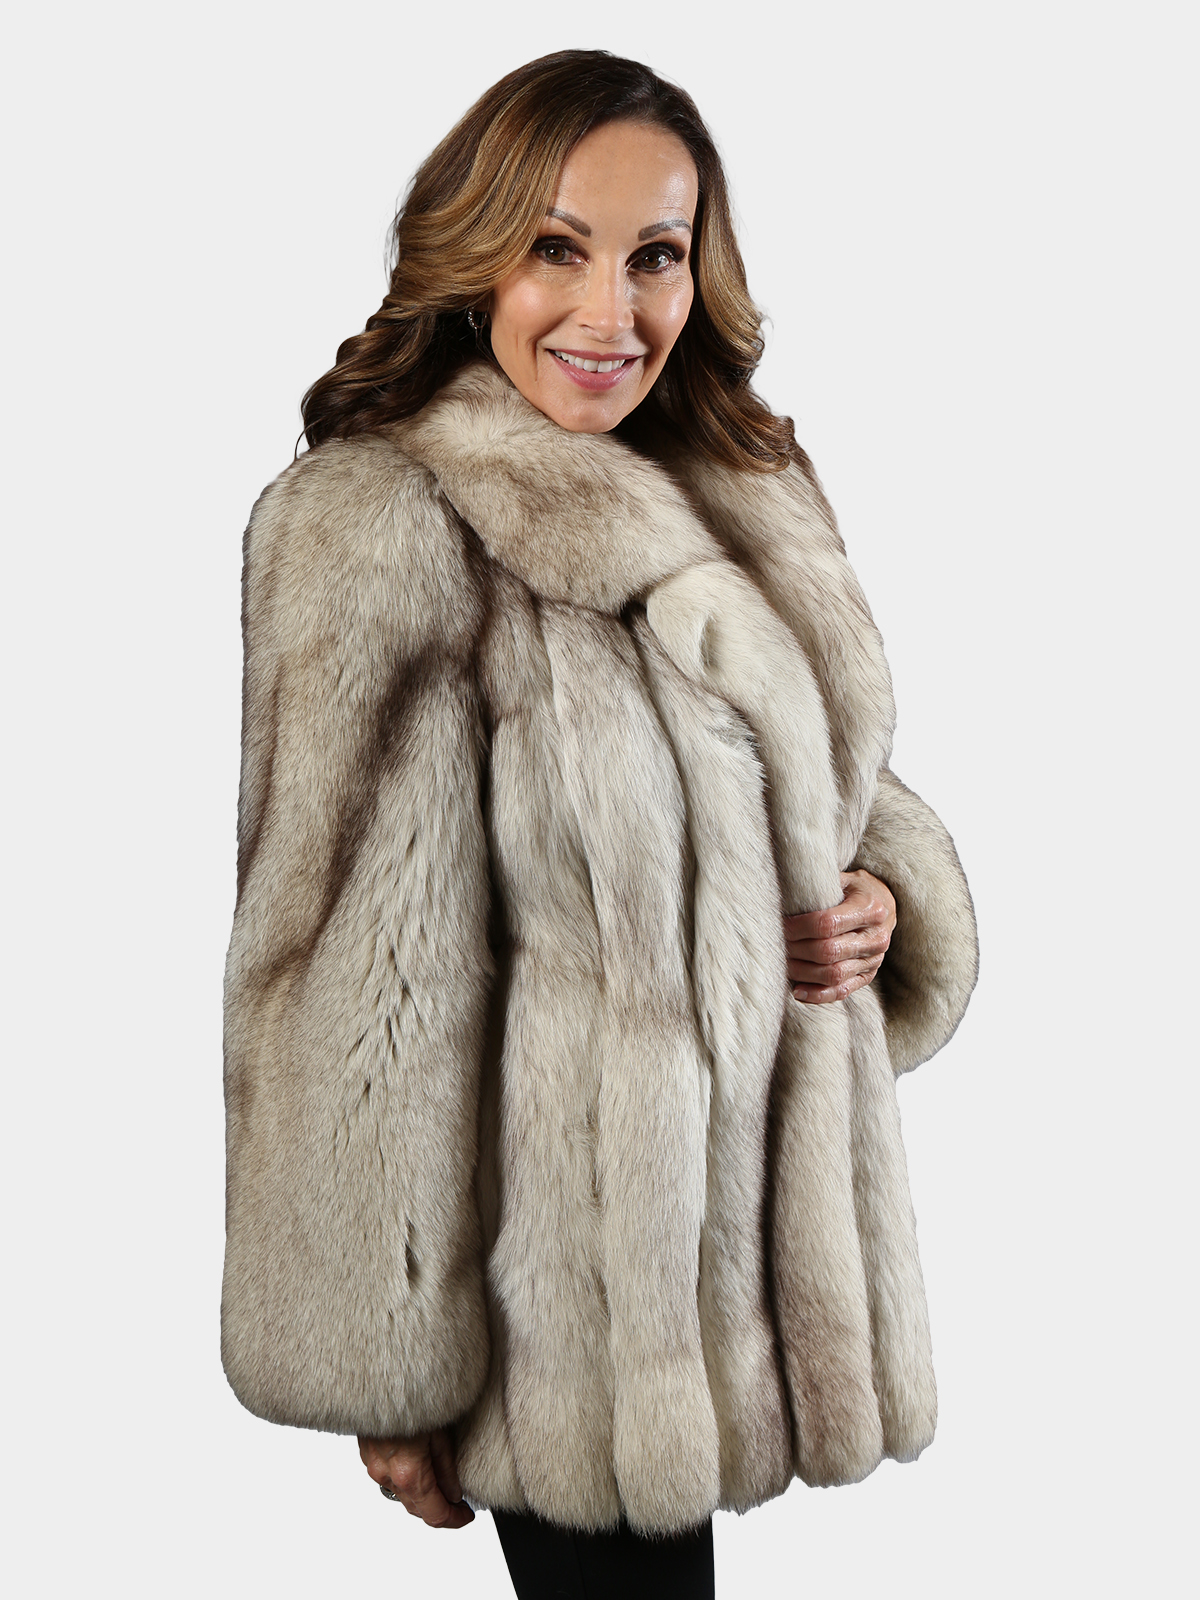 Blue Fox Fur Jacket Womens Small Estate Furs